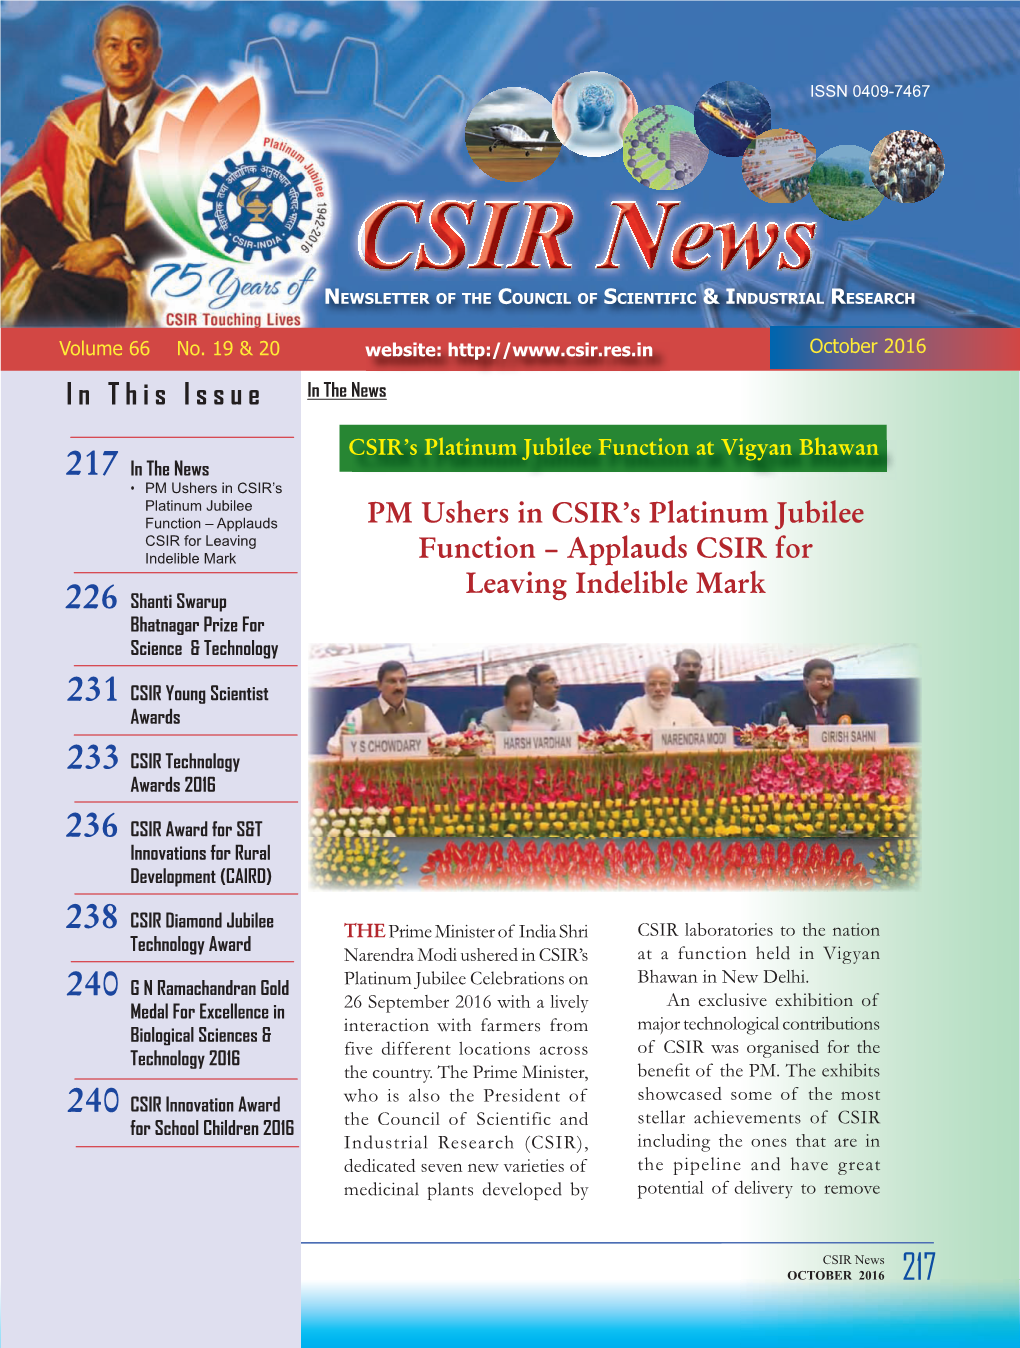 PM Ushers in CSIR's Platinum Jubilee Function